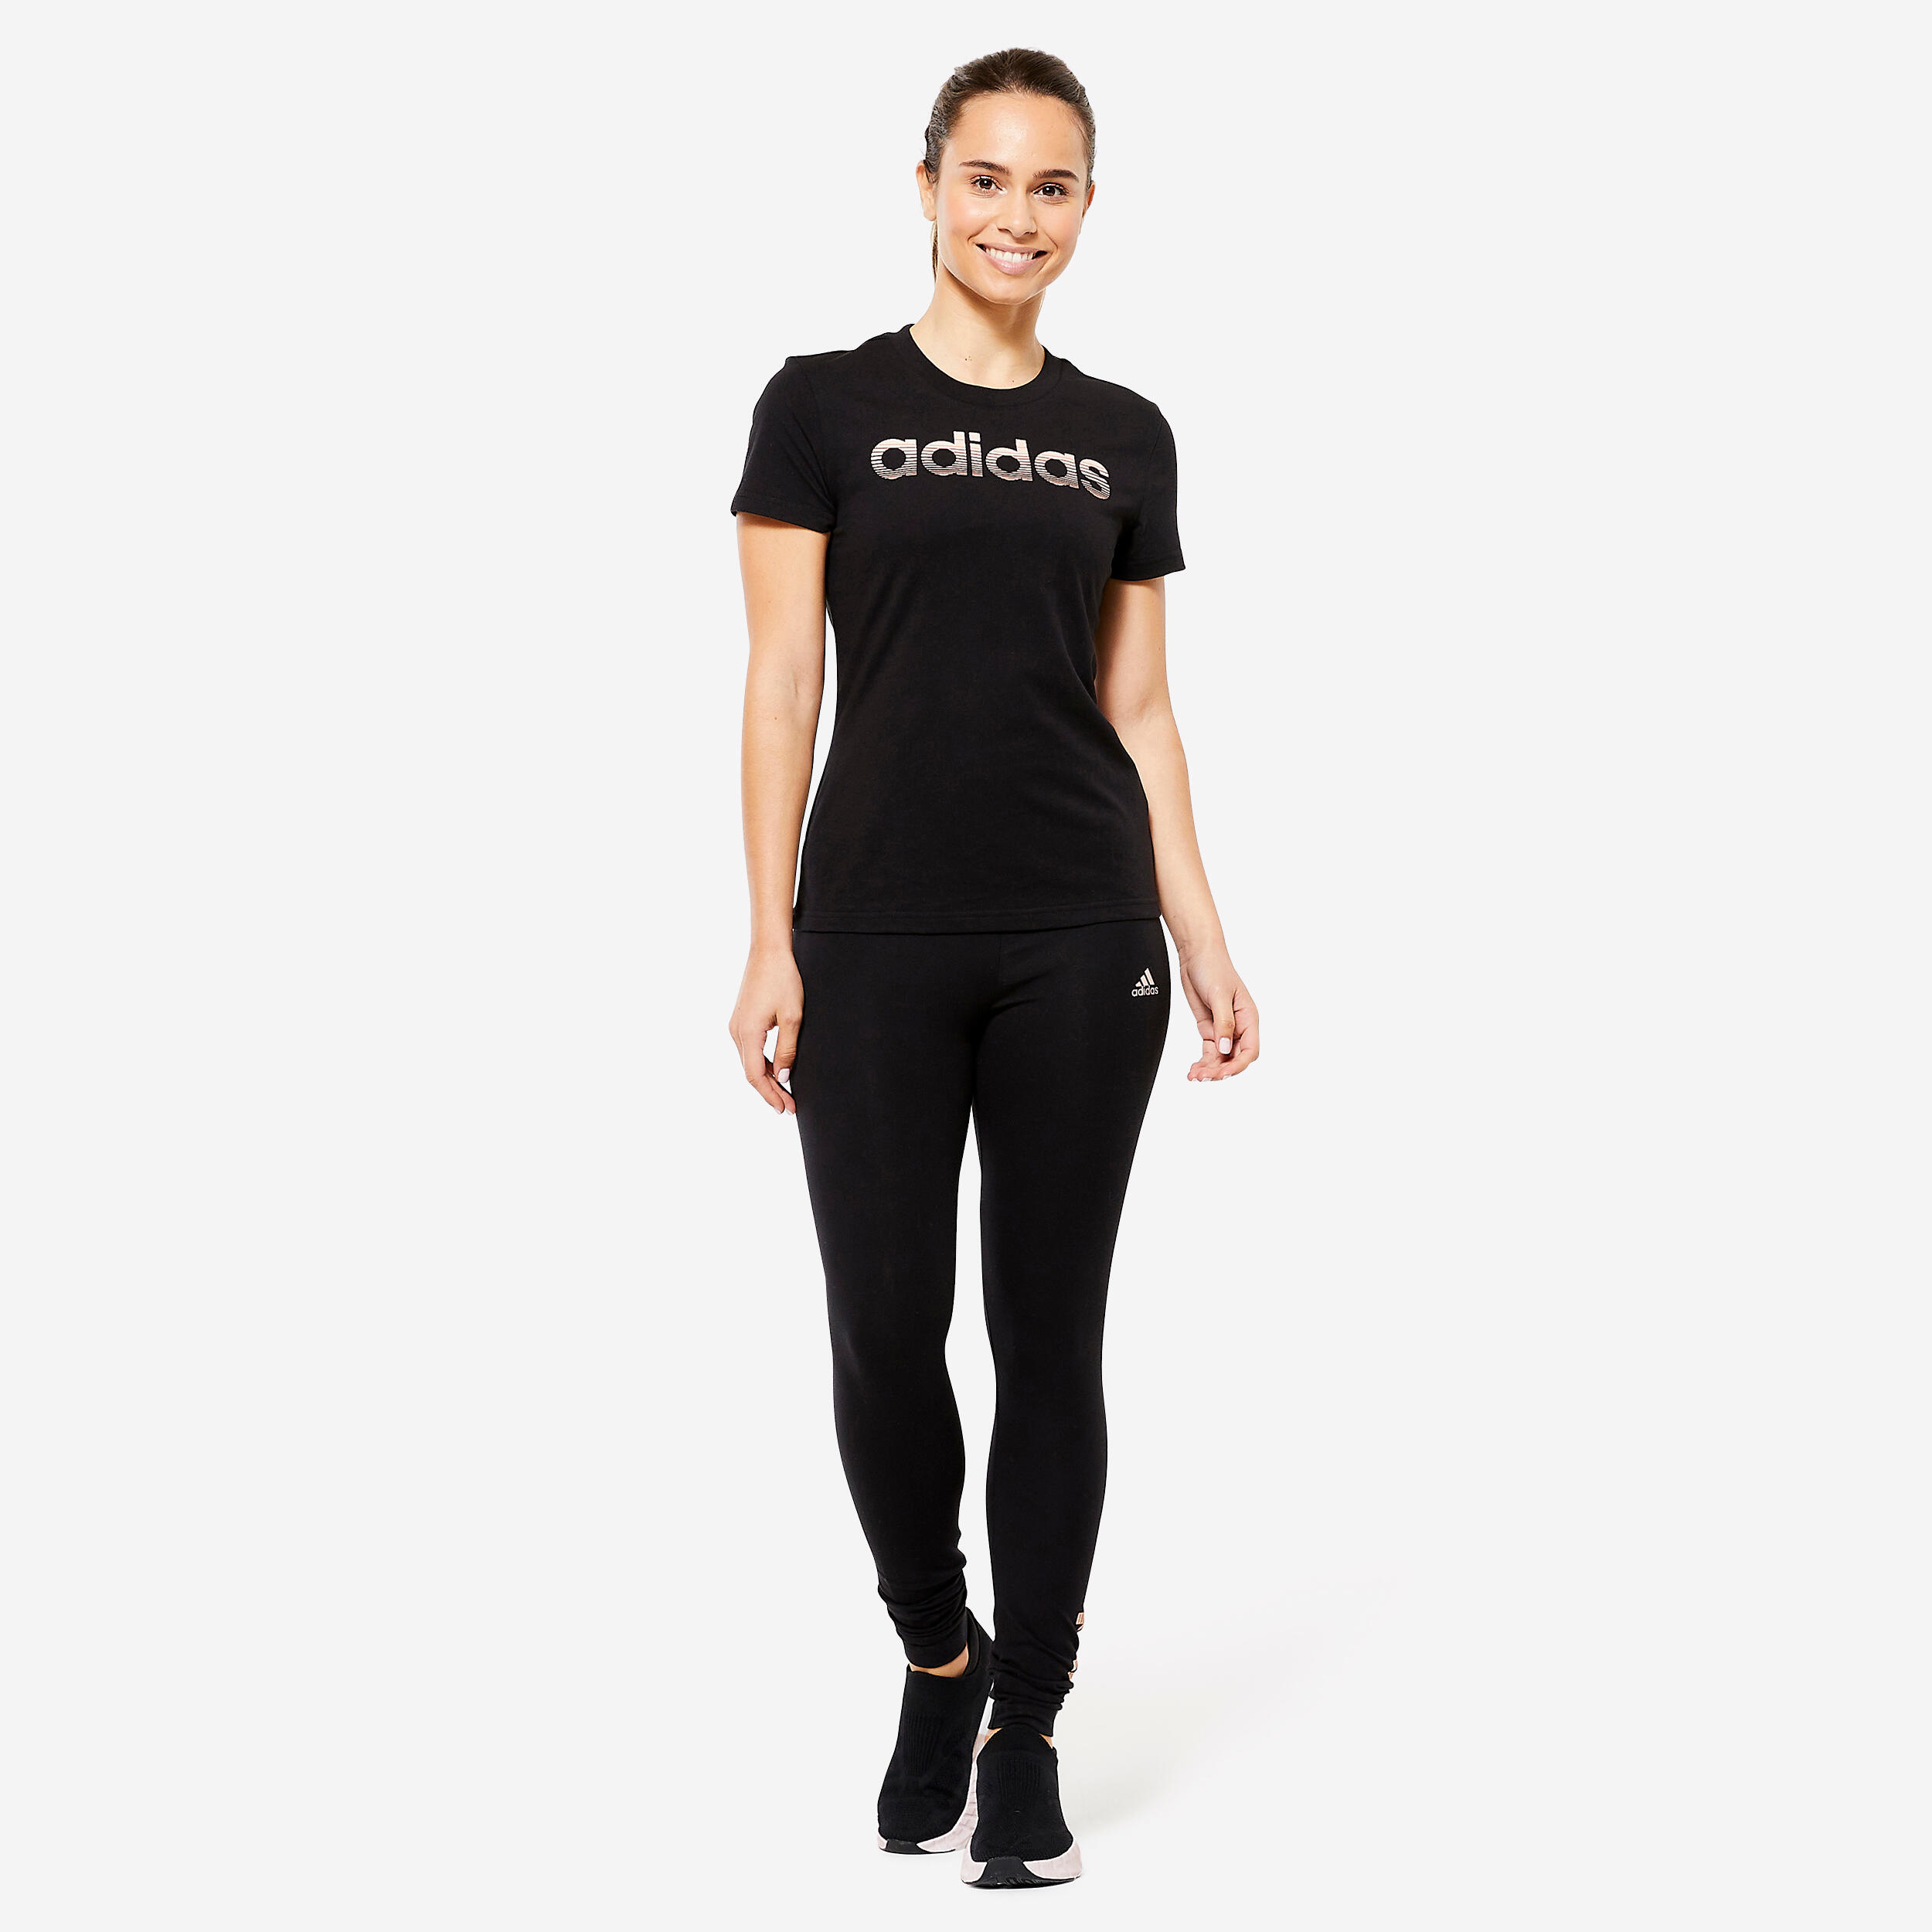 Women's Low-Impact Fitness T-Shirt - Black 2/6